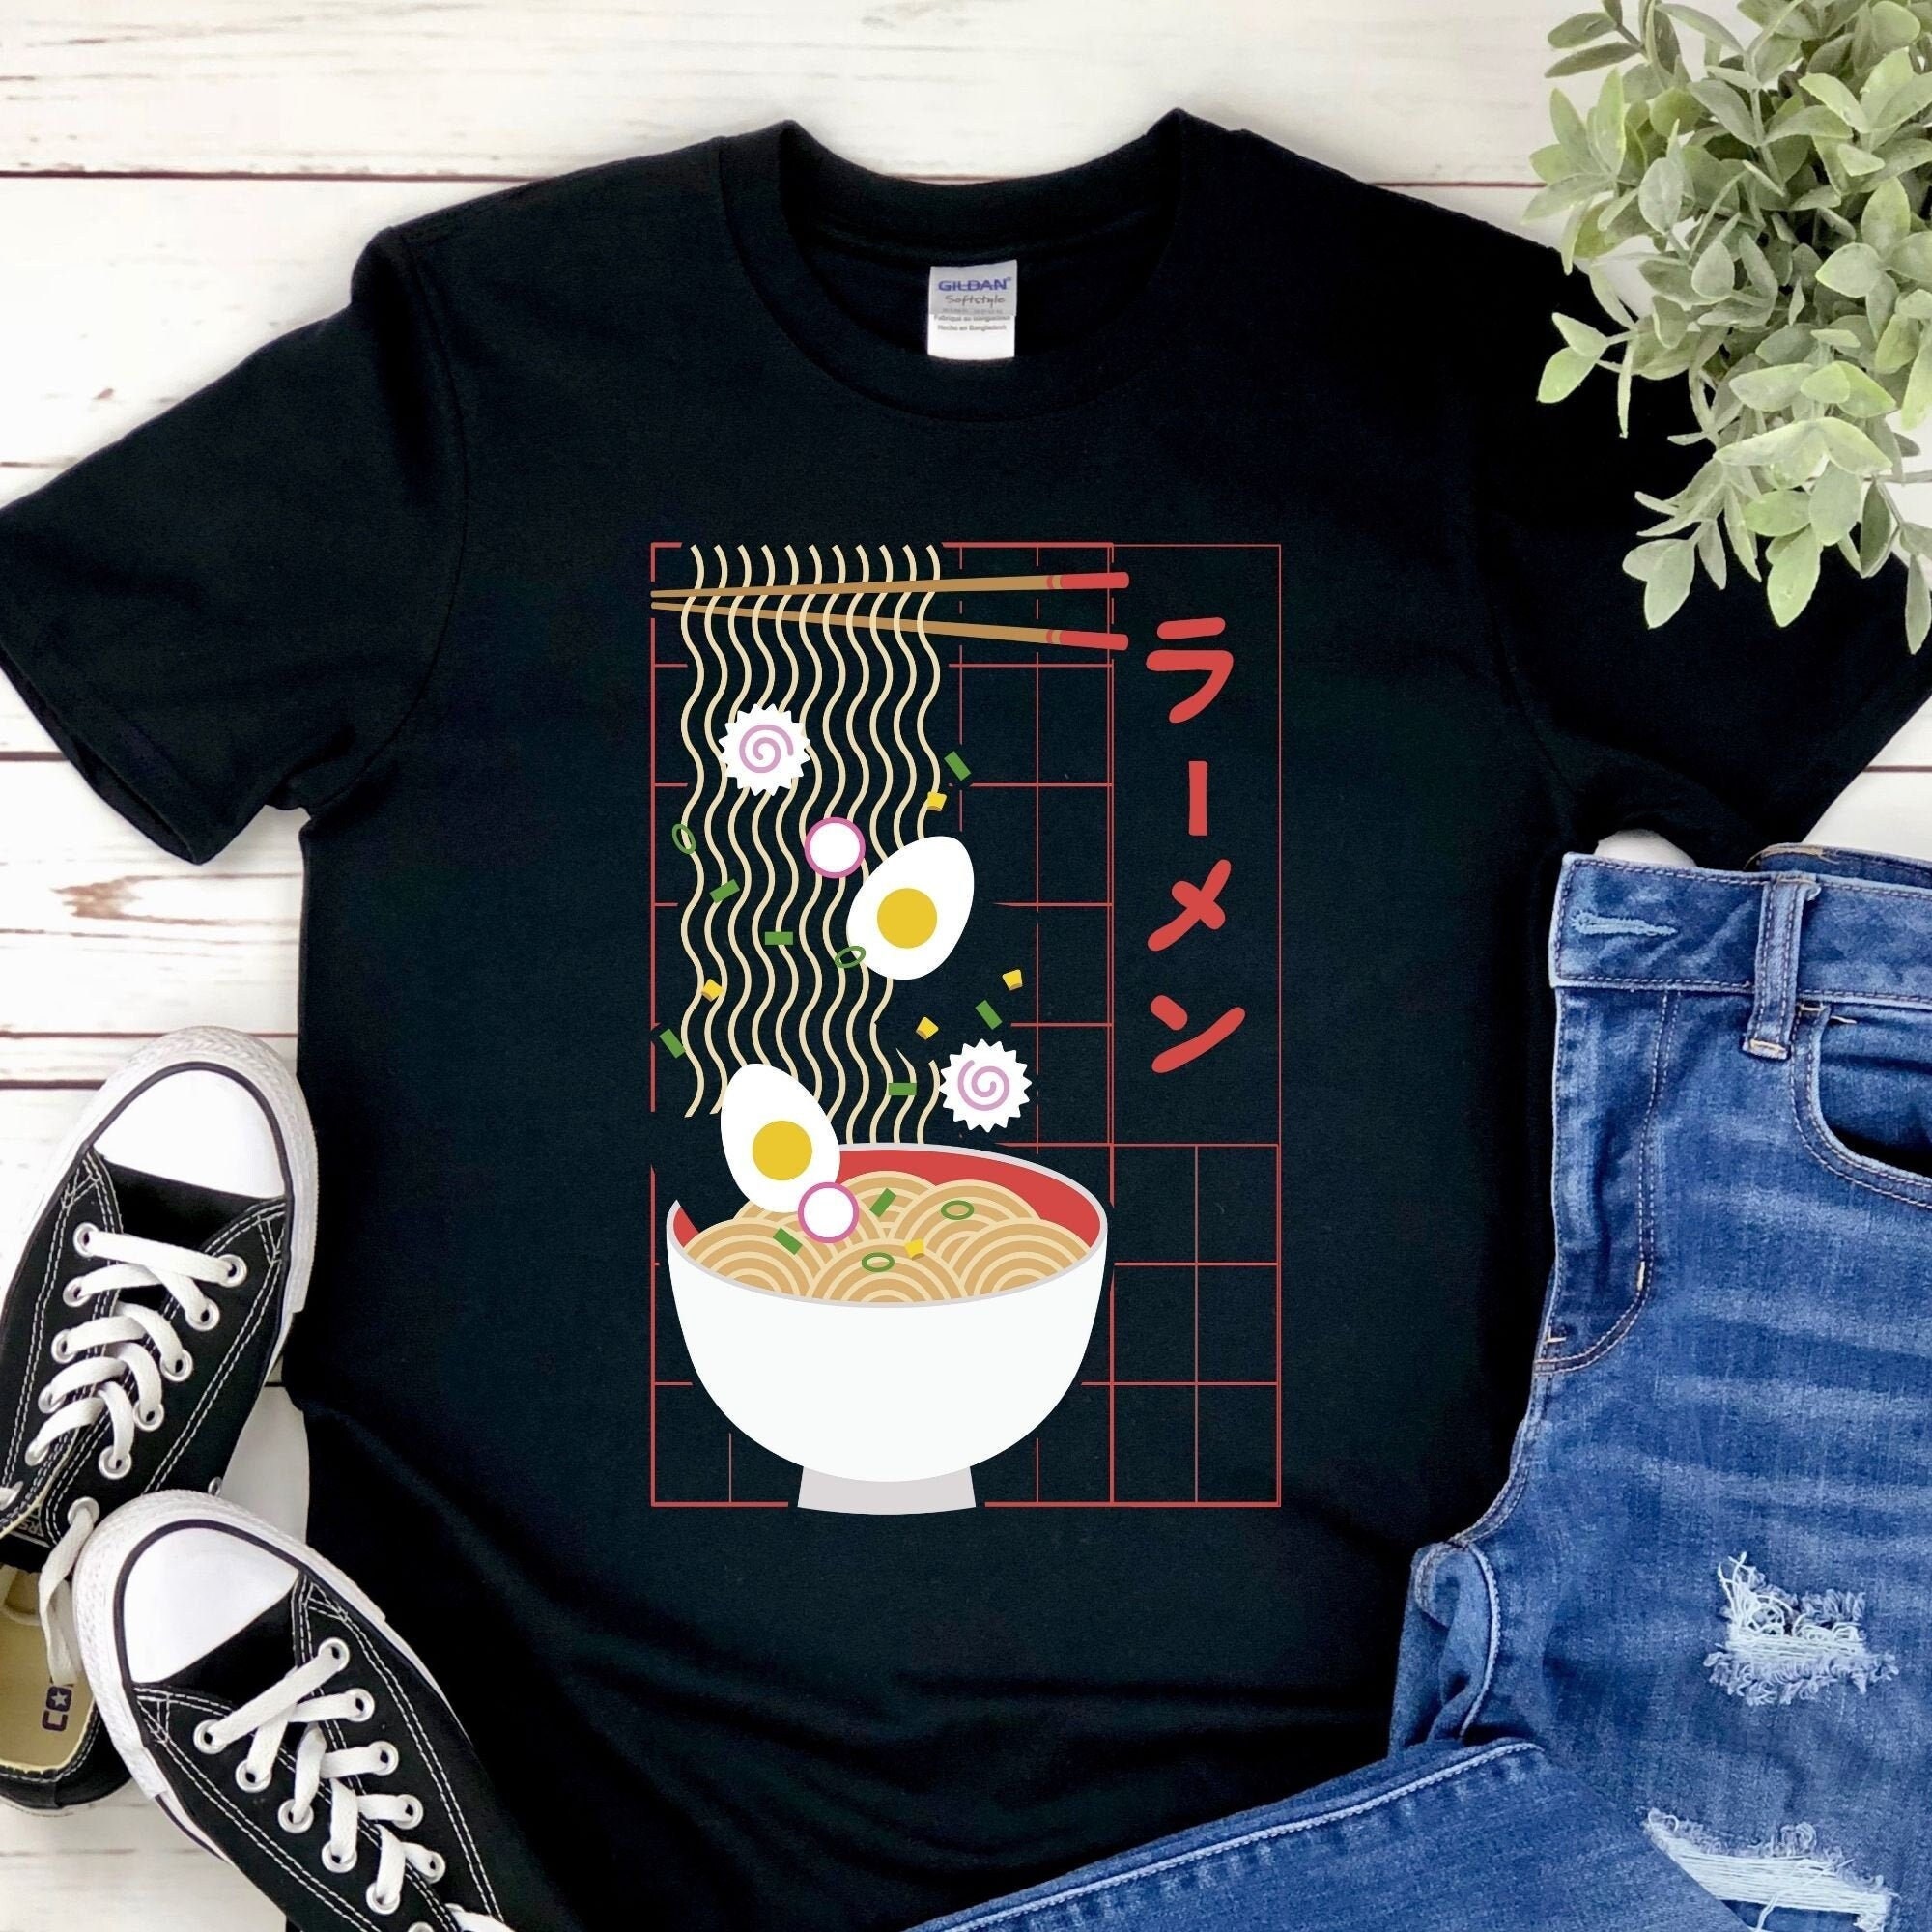 Vaporwave Aesthetic Ramen Foodie T-Shirt Japanese Noodles Bowl Soup Chopsticks Pastel Goth Clothing Asian Kawaii Tokyo Tee Tank Top/Hoodie